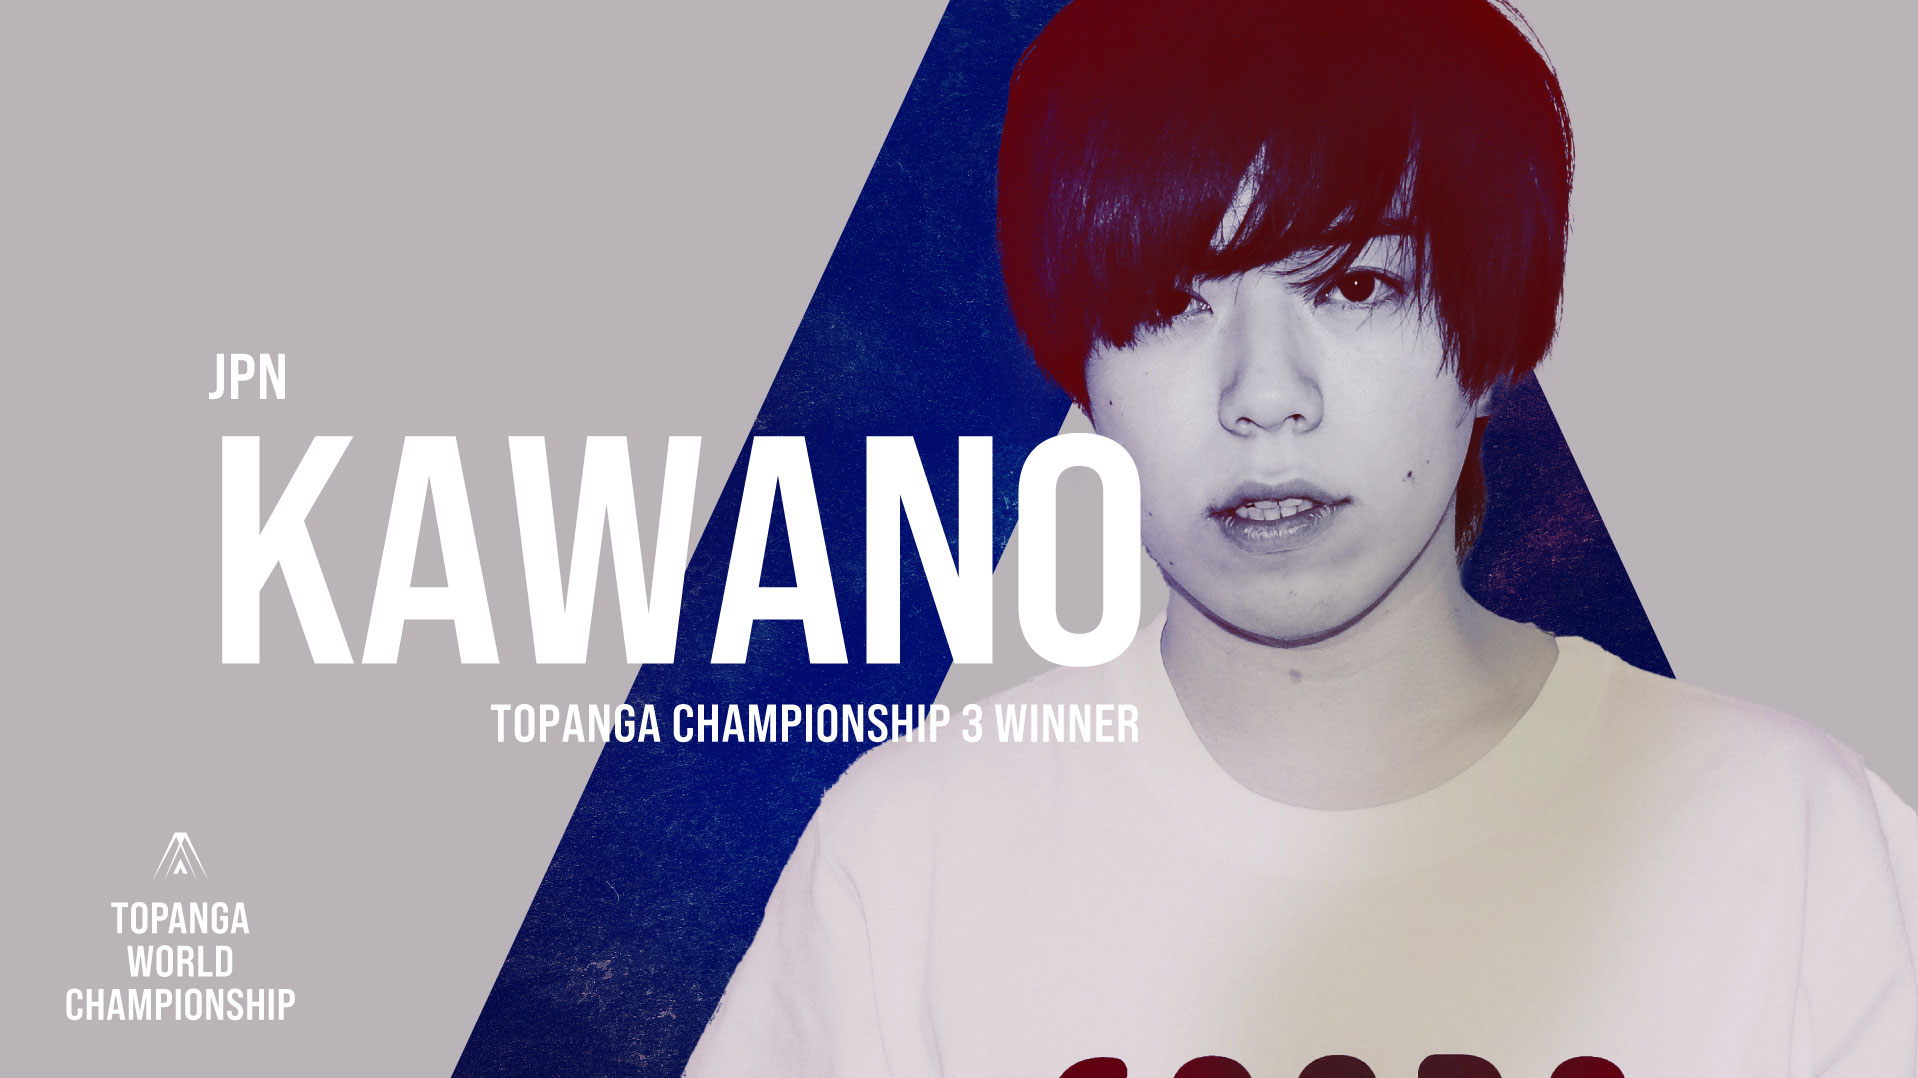 KAWANO|TOPANGA CHAMPIONSHIP 3 WINNER